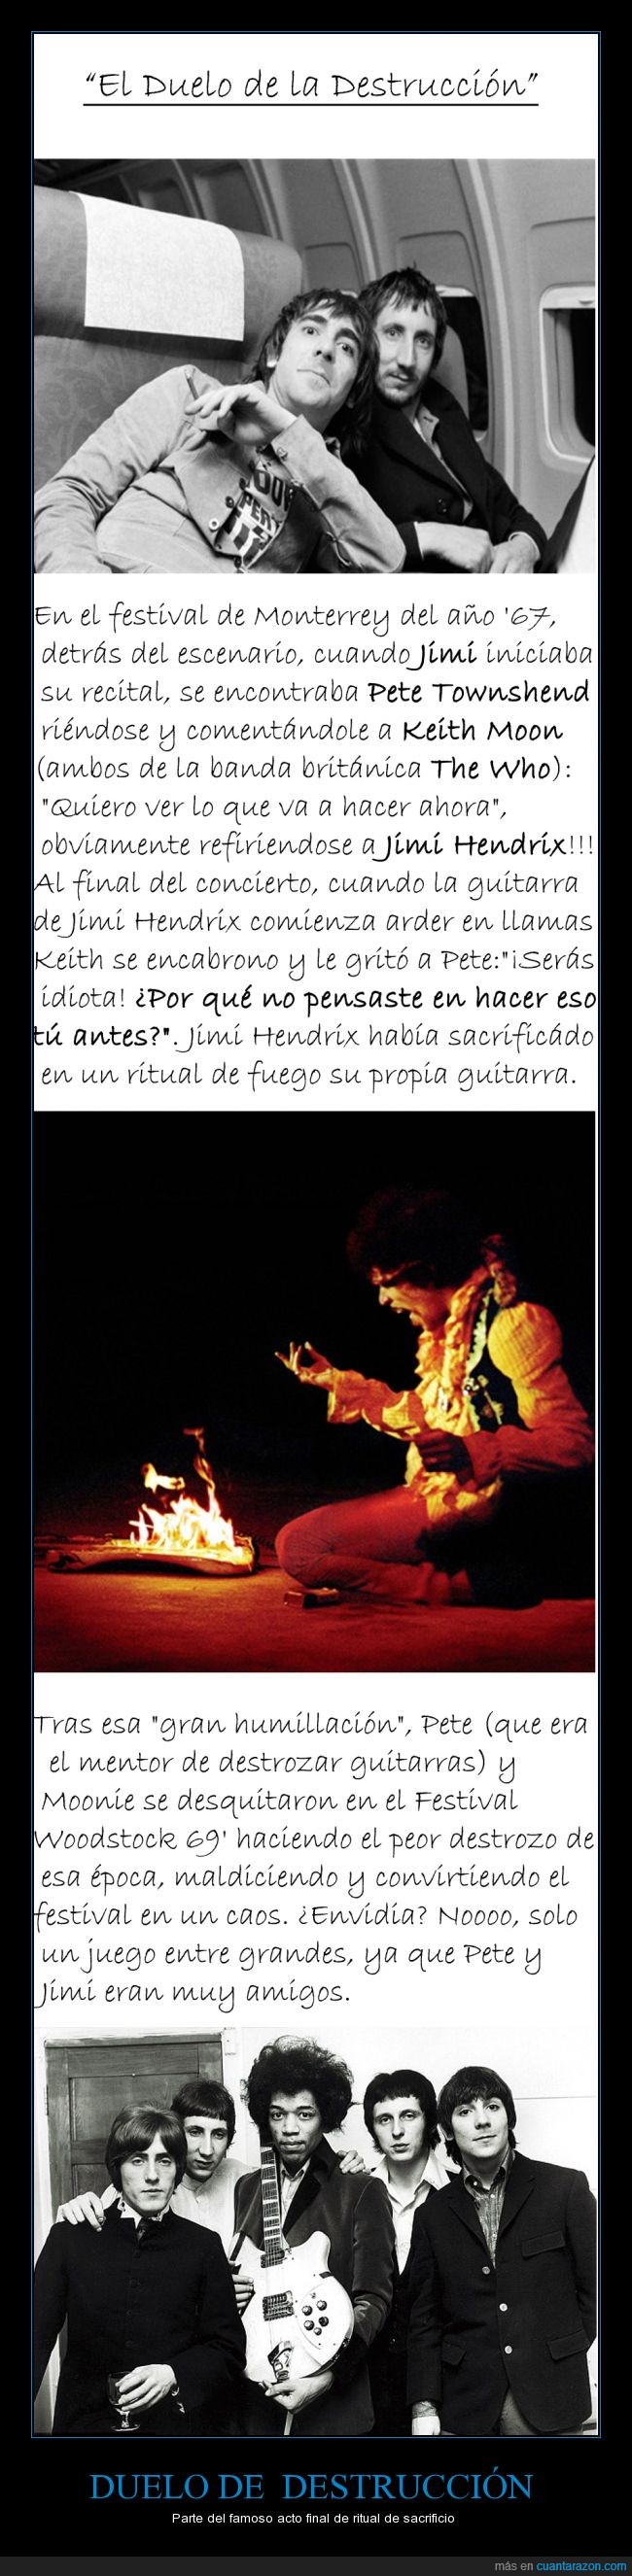 Jimi Hendrix,The Who,Keith Moon,Pete Townshend,fuego,sacrificio,guitarra